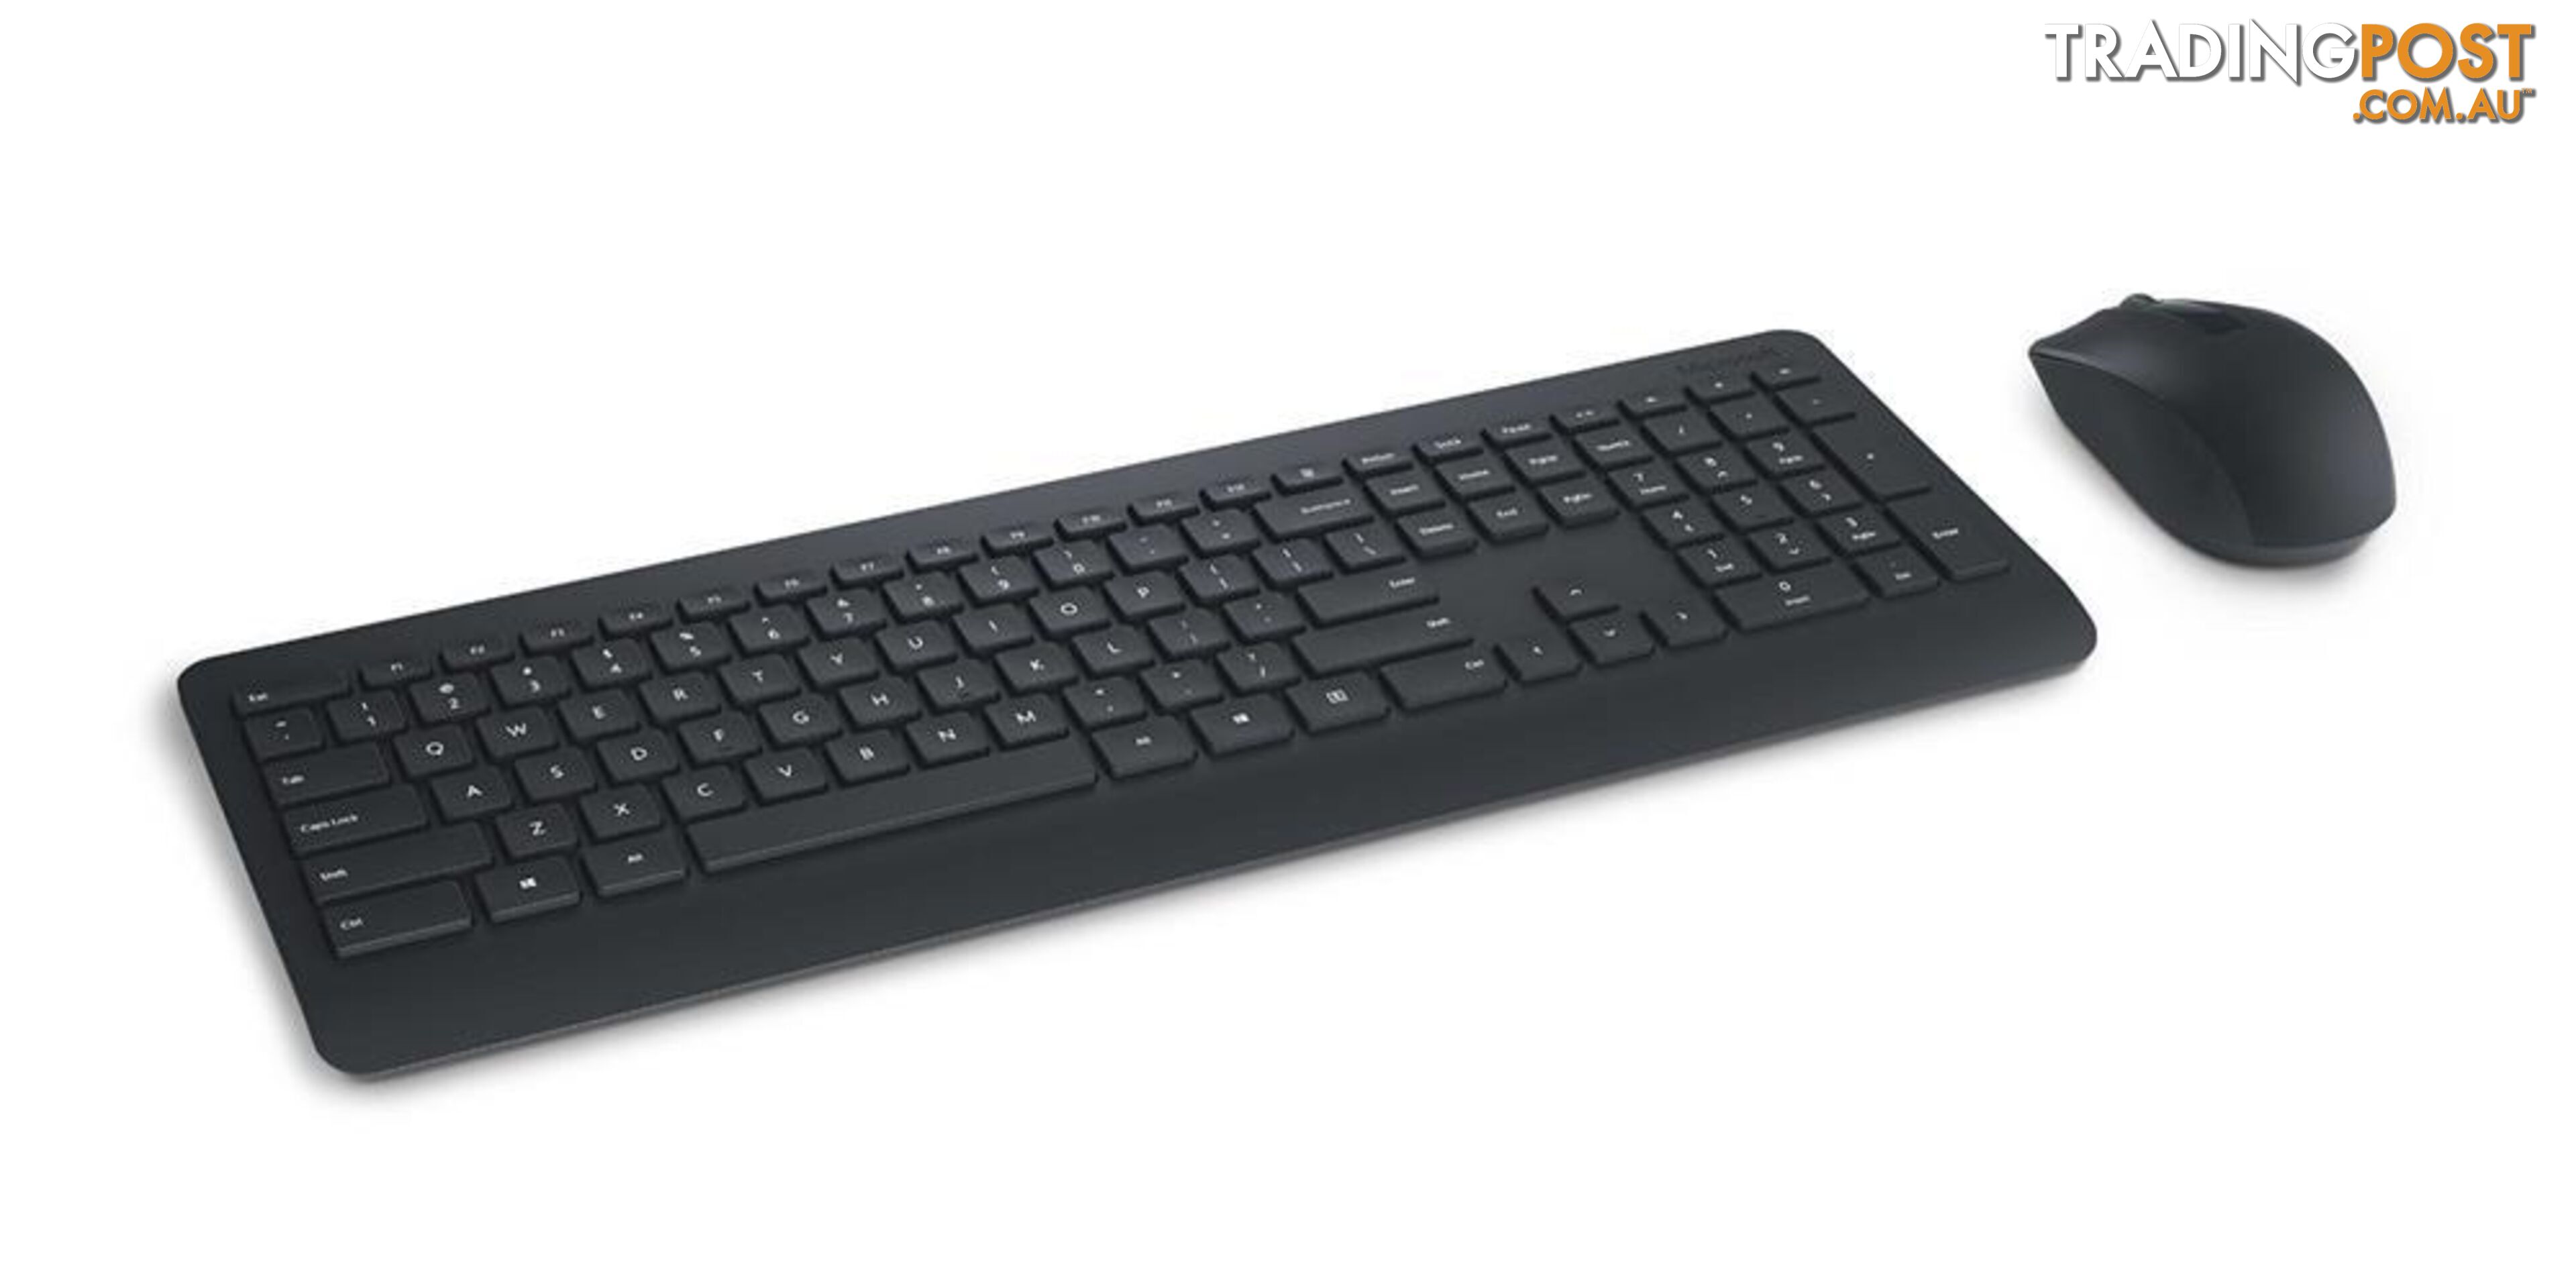 Microsoft Wireless Desktop 900 Keyboard & Mouse Retail Black -PT3-00027 - KBMS-WLDT900